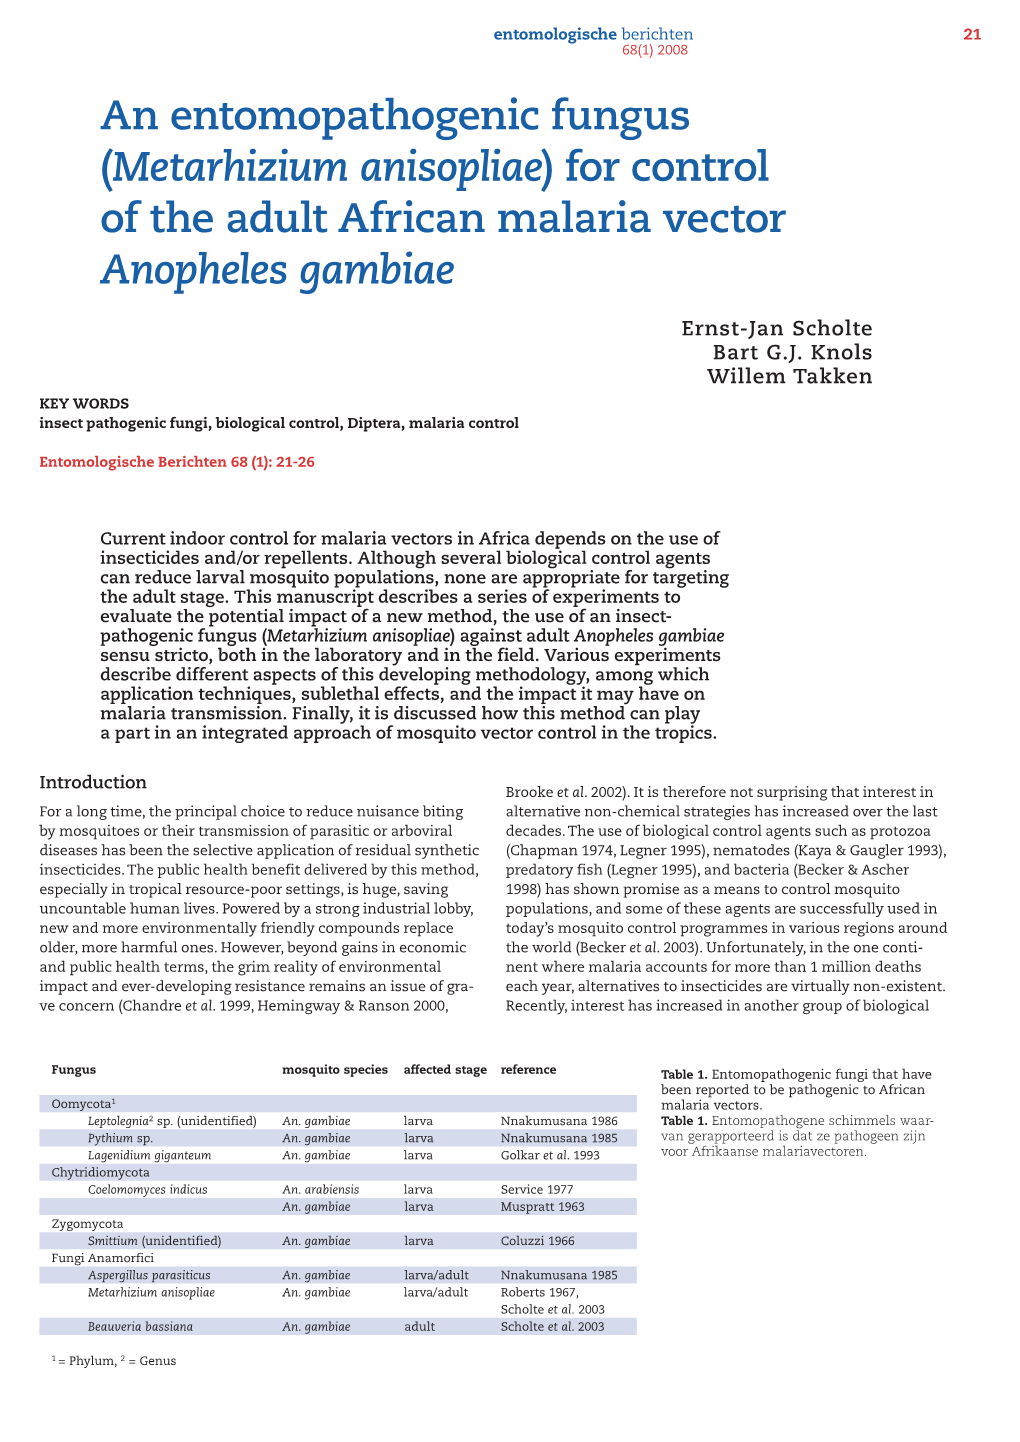 An Entomopathogenic Fungus (Metarhizium Anisopliae) for Control of the Adult African Malaria Vector Anopheles Gambiae